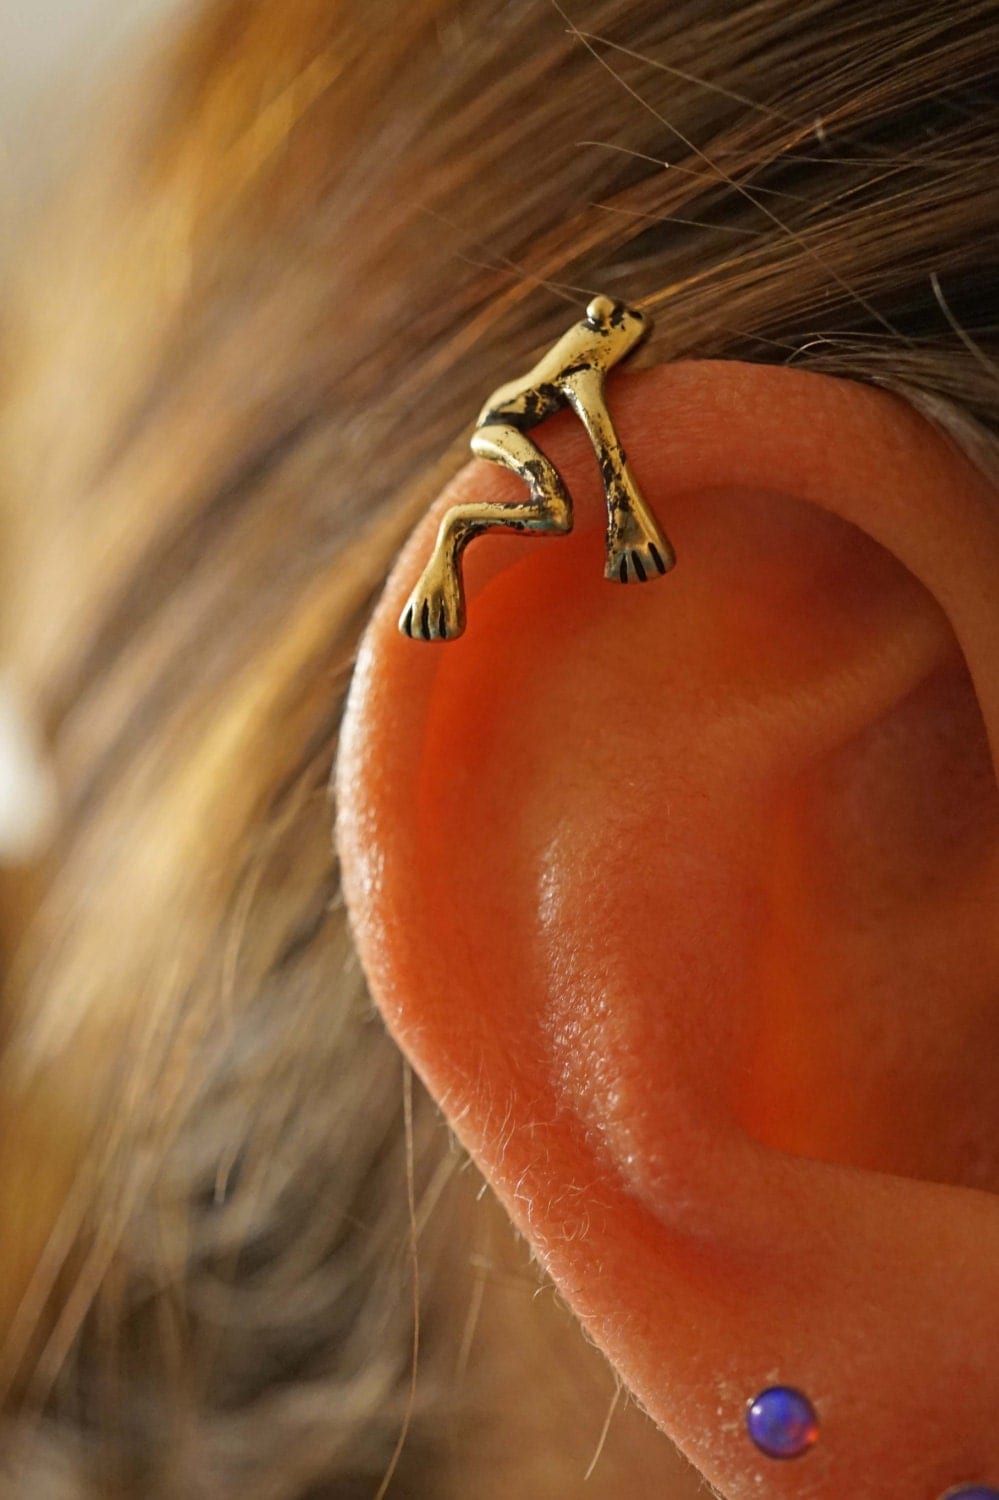 Gold Tree Frog Ear Cuff Jacket No Piercing Non Pierced